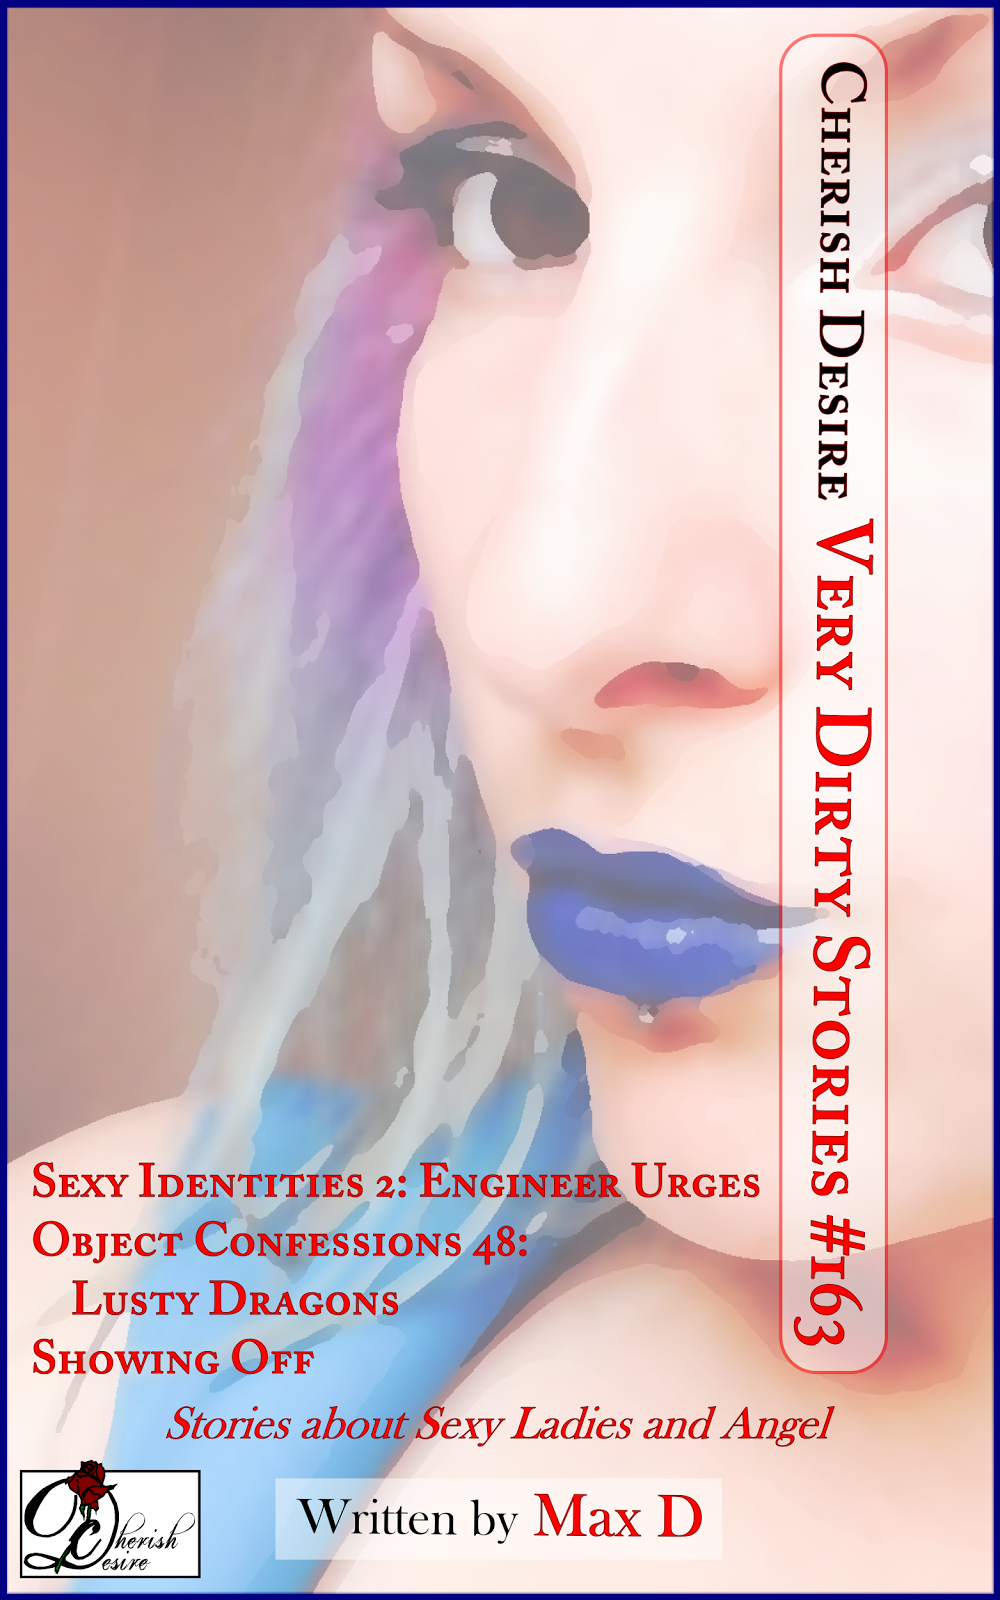 Cherish Desire: Very Dirty Stories #163, Max D, erotica